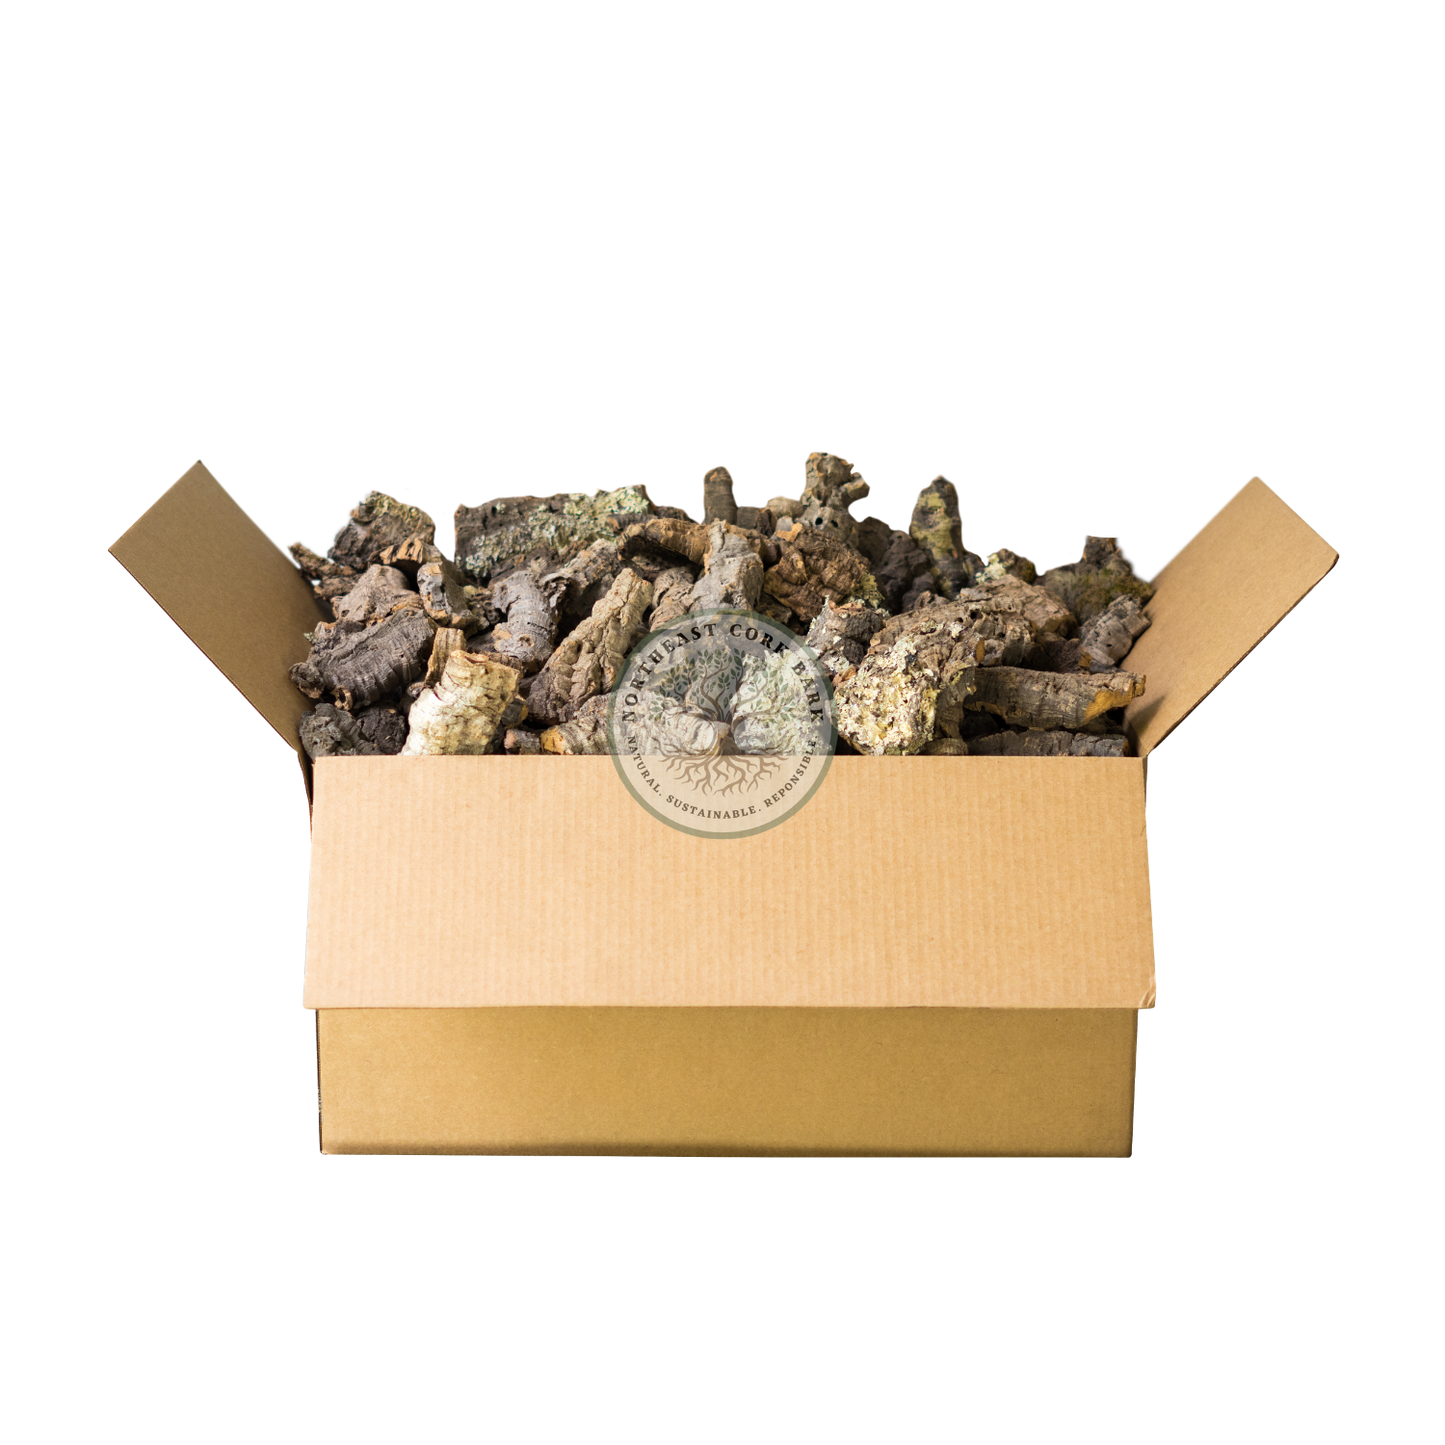 Premium Bulk Box Natural Cork Bark Chunks for Reptiles, Vivariums, and More.